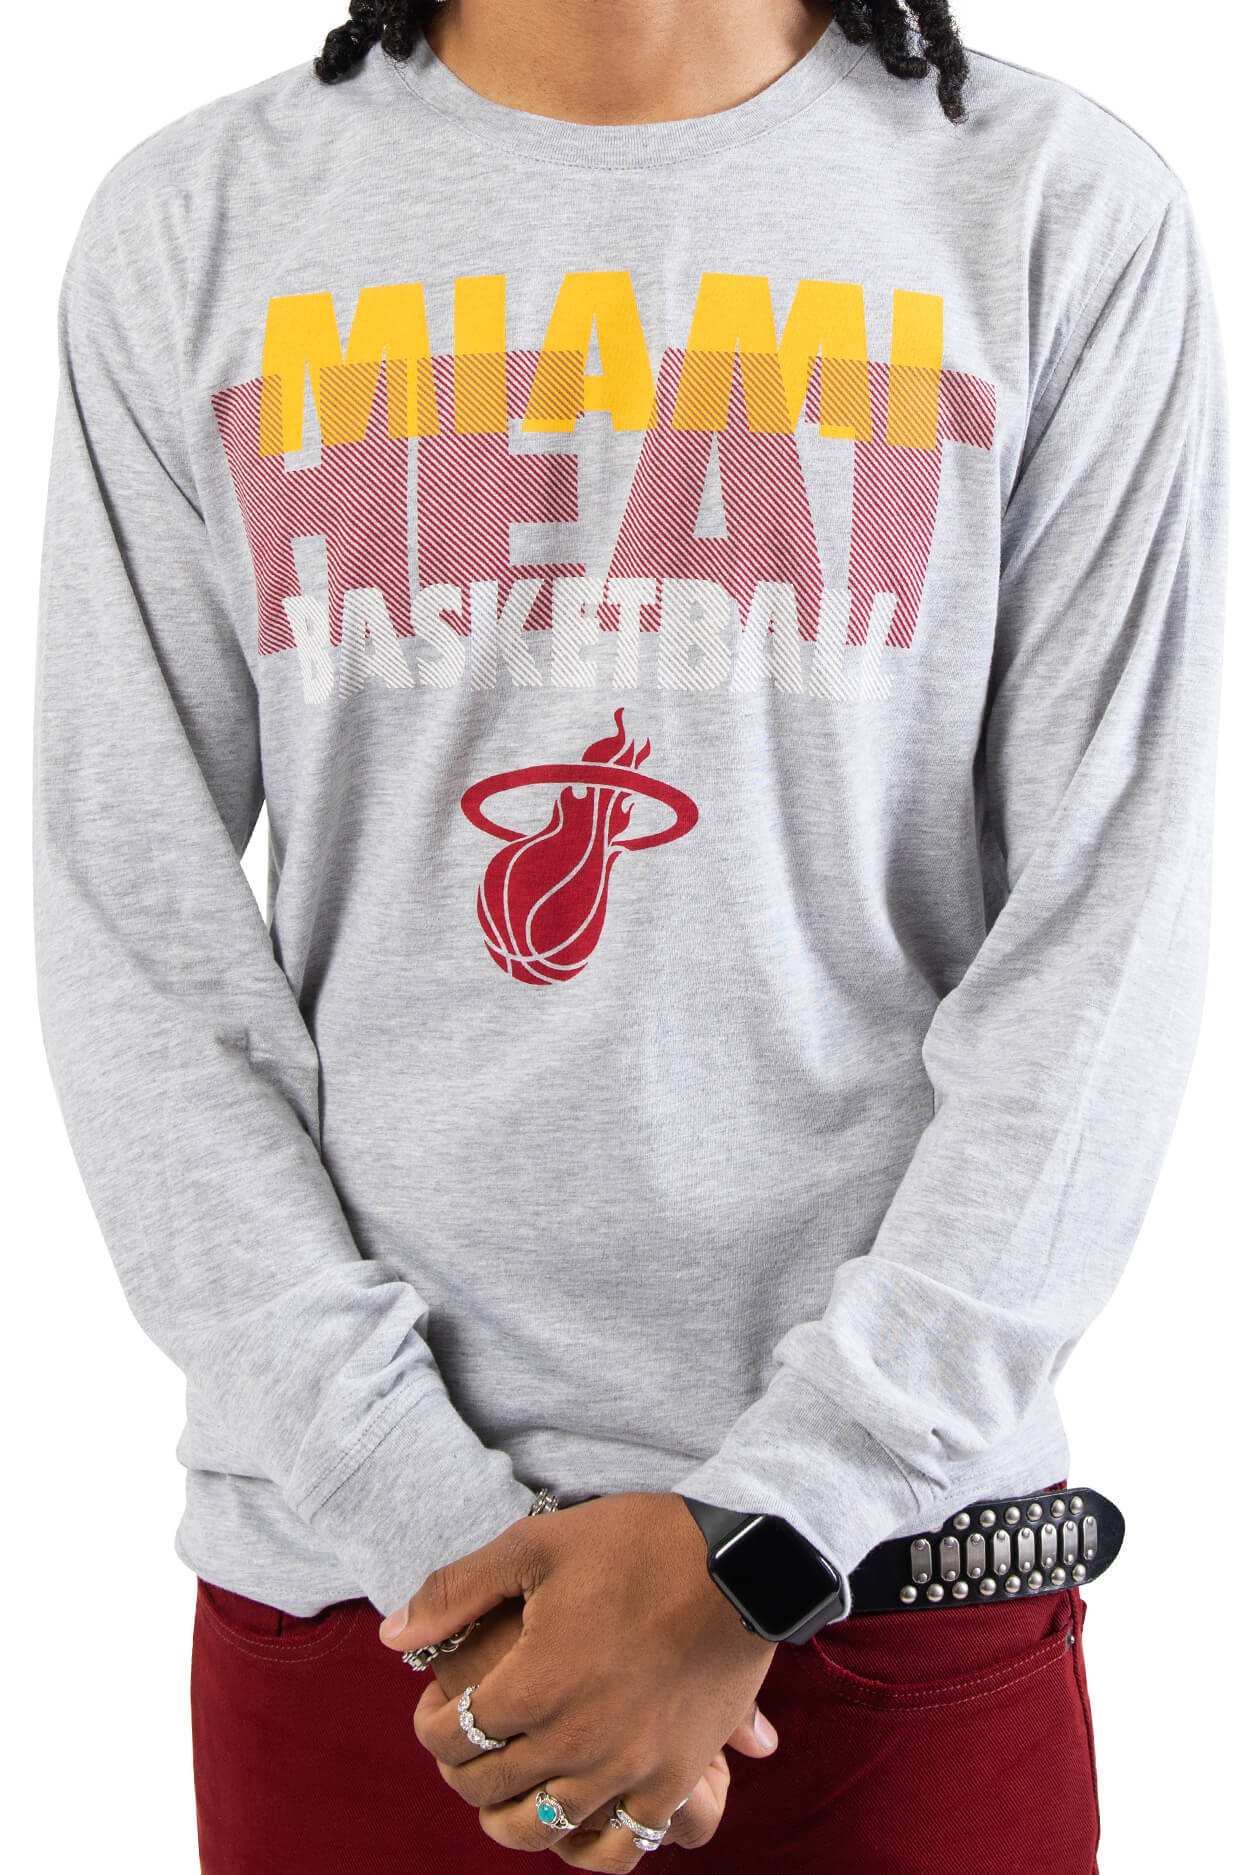 NBA Miami Heat Men's Long Sleeve Pullover|Miami Heat